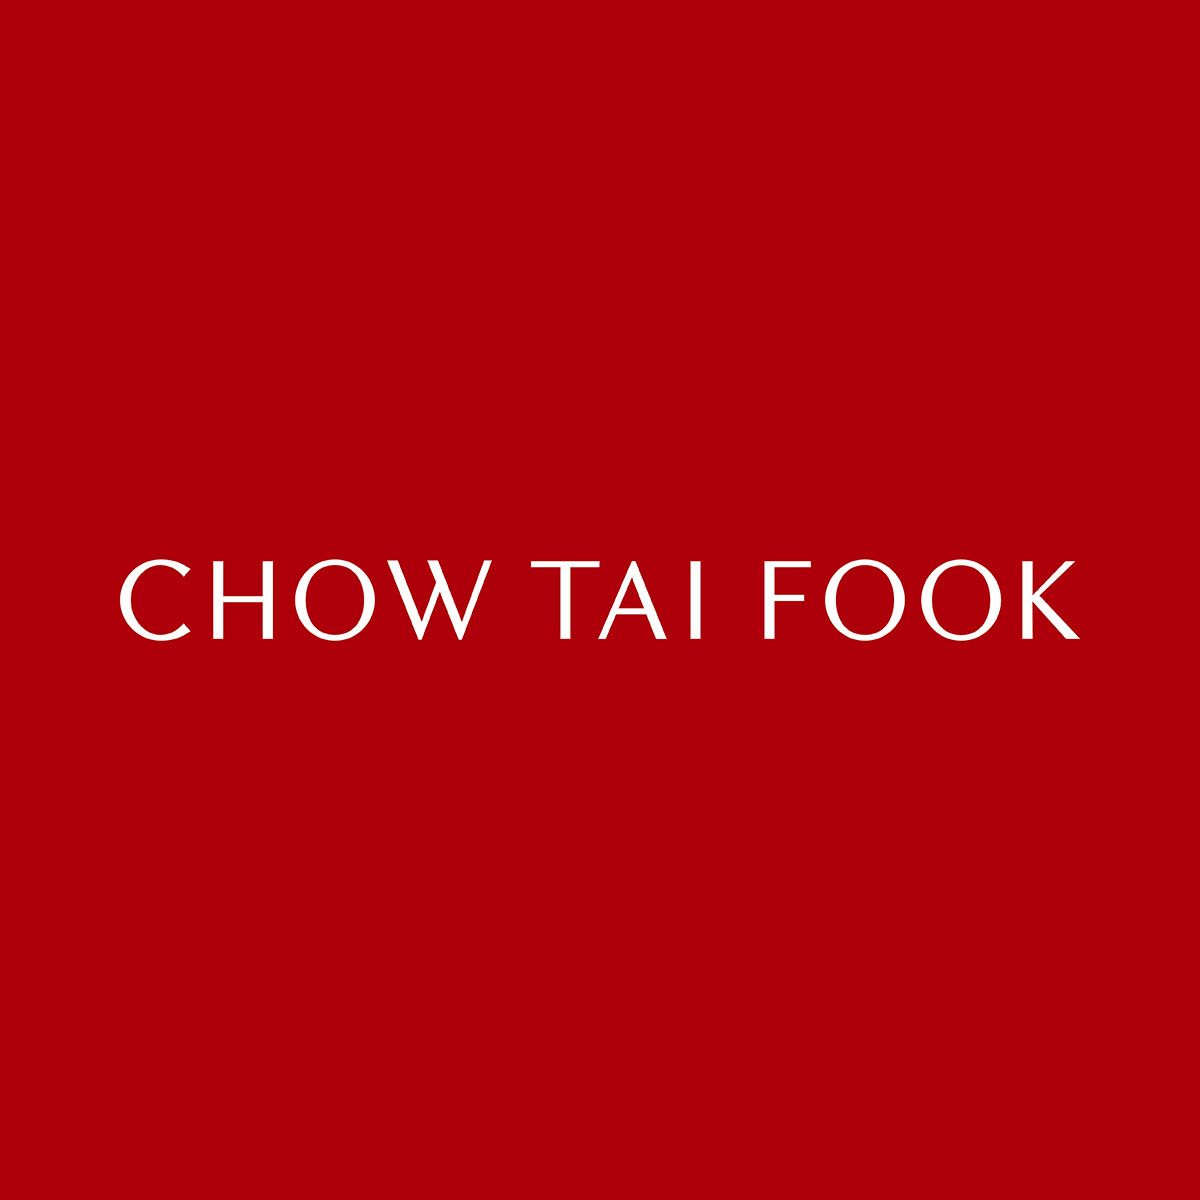 周大福 Chow Tai Fook 